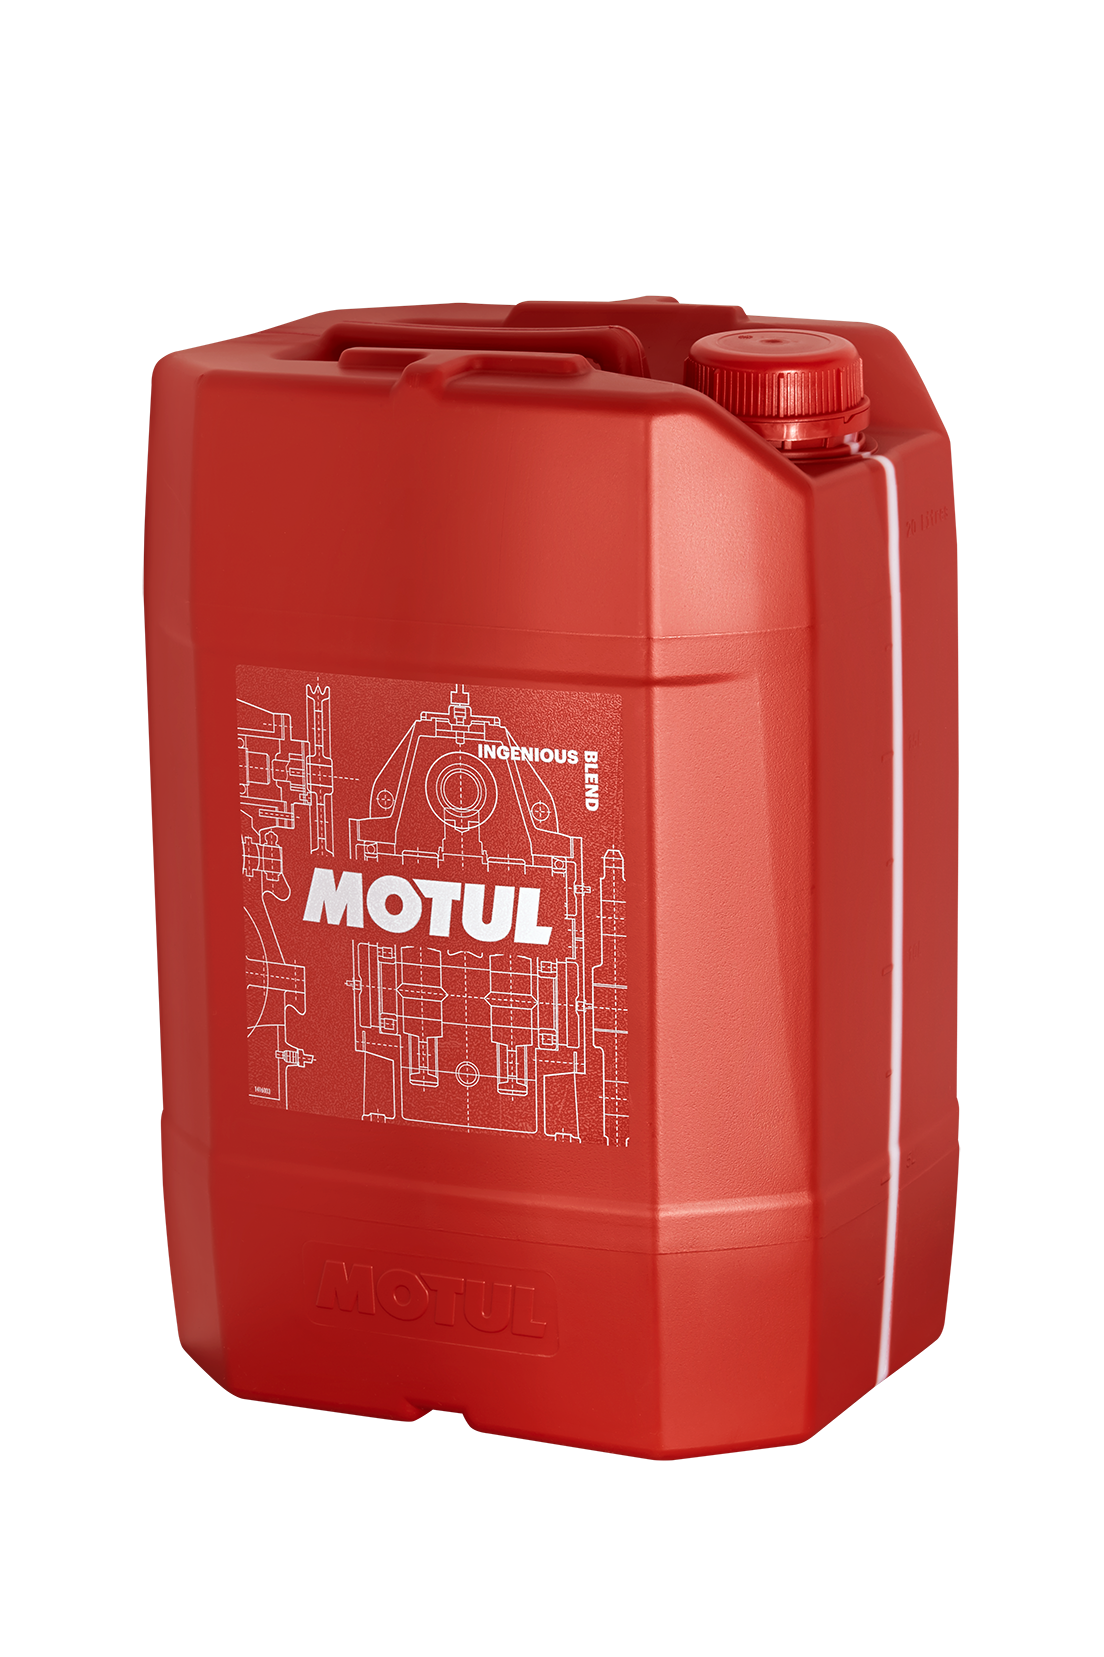 MOTUL ATF VI 20L - Fully Synthetic Transmission fluid